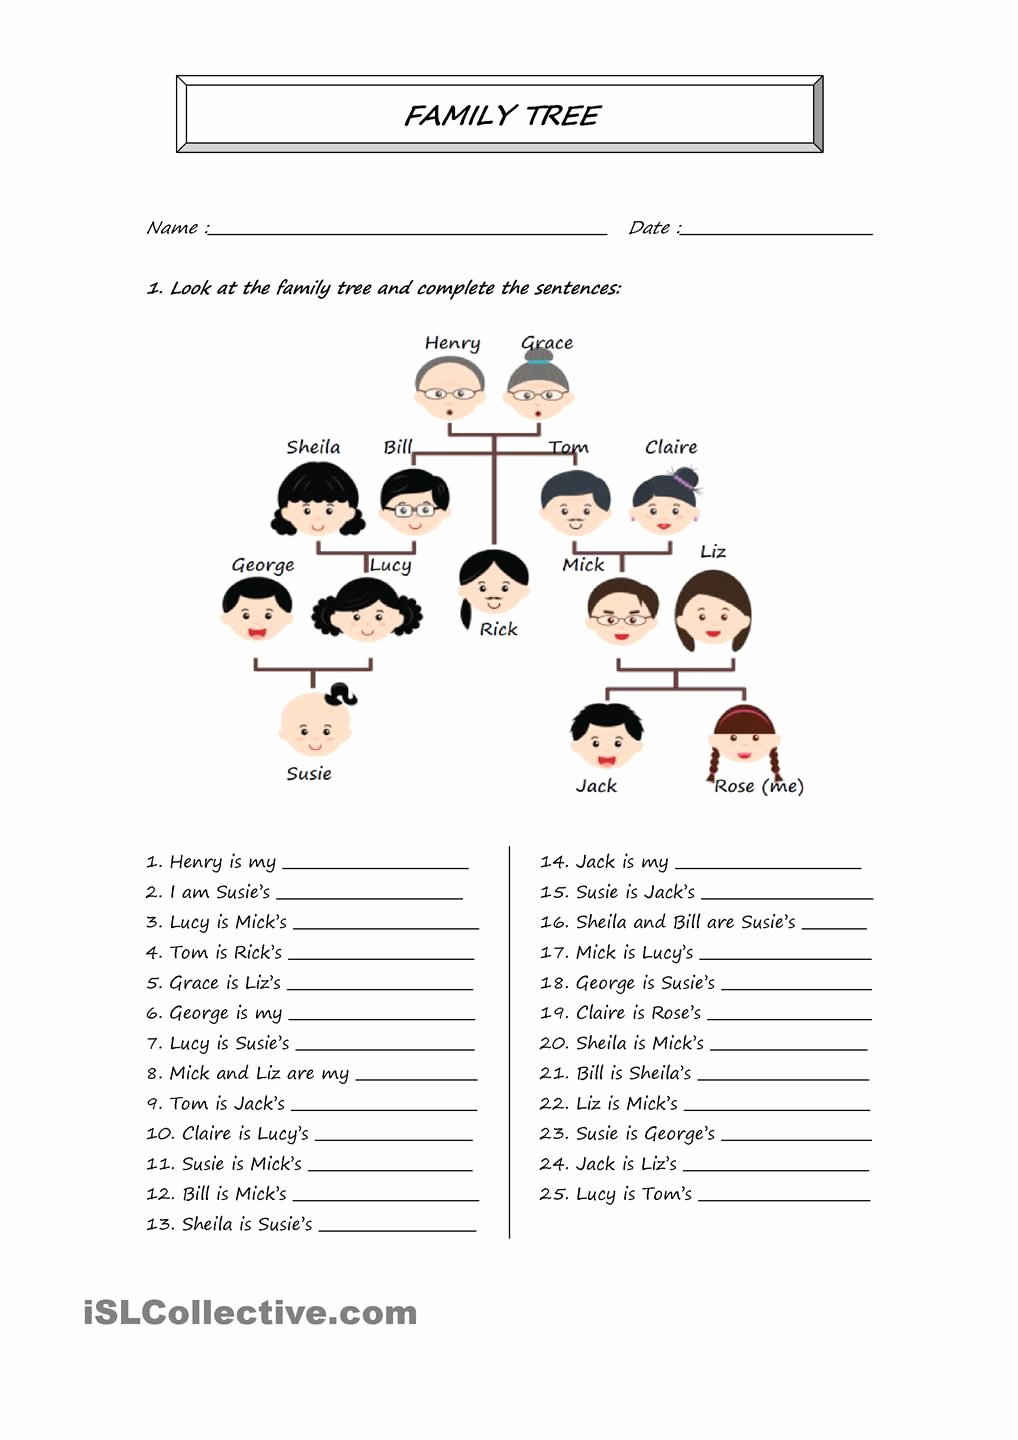 Family Tree Worksheet Printable Awesome Full Family Tree 1 1018×1440